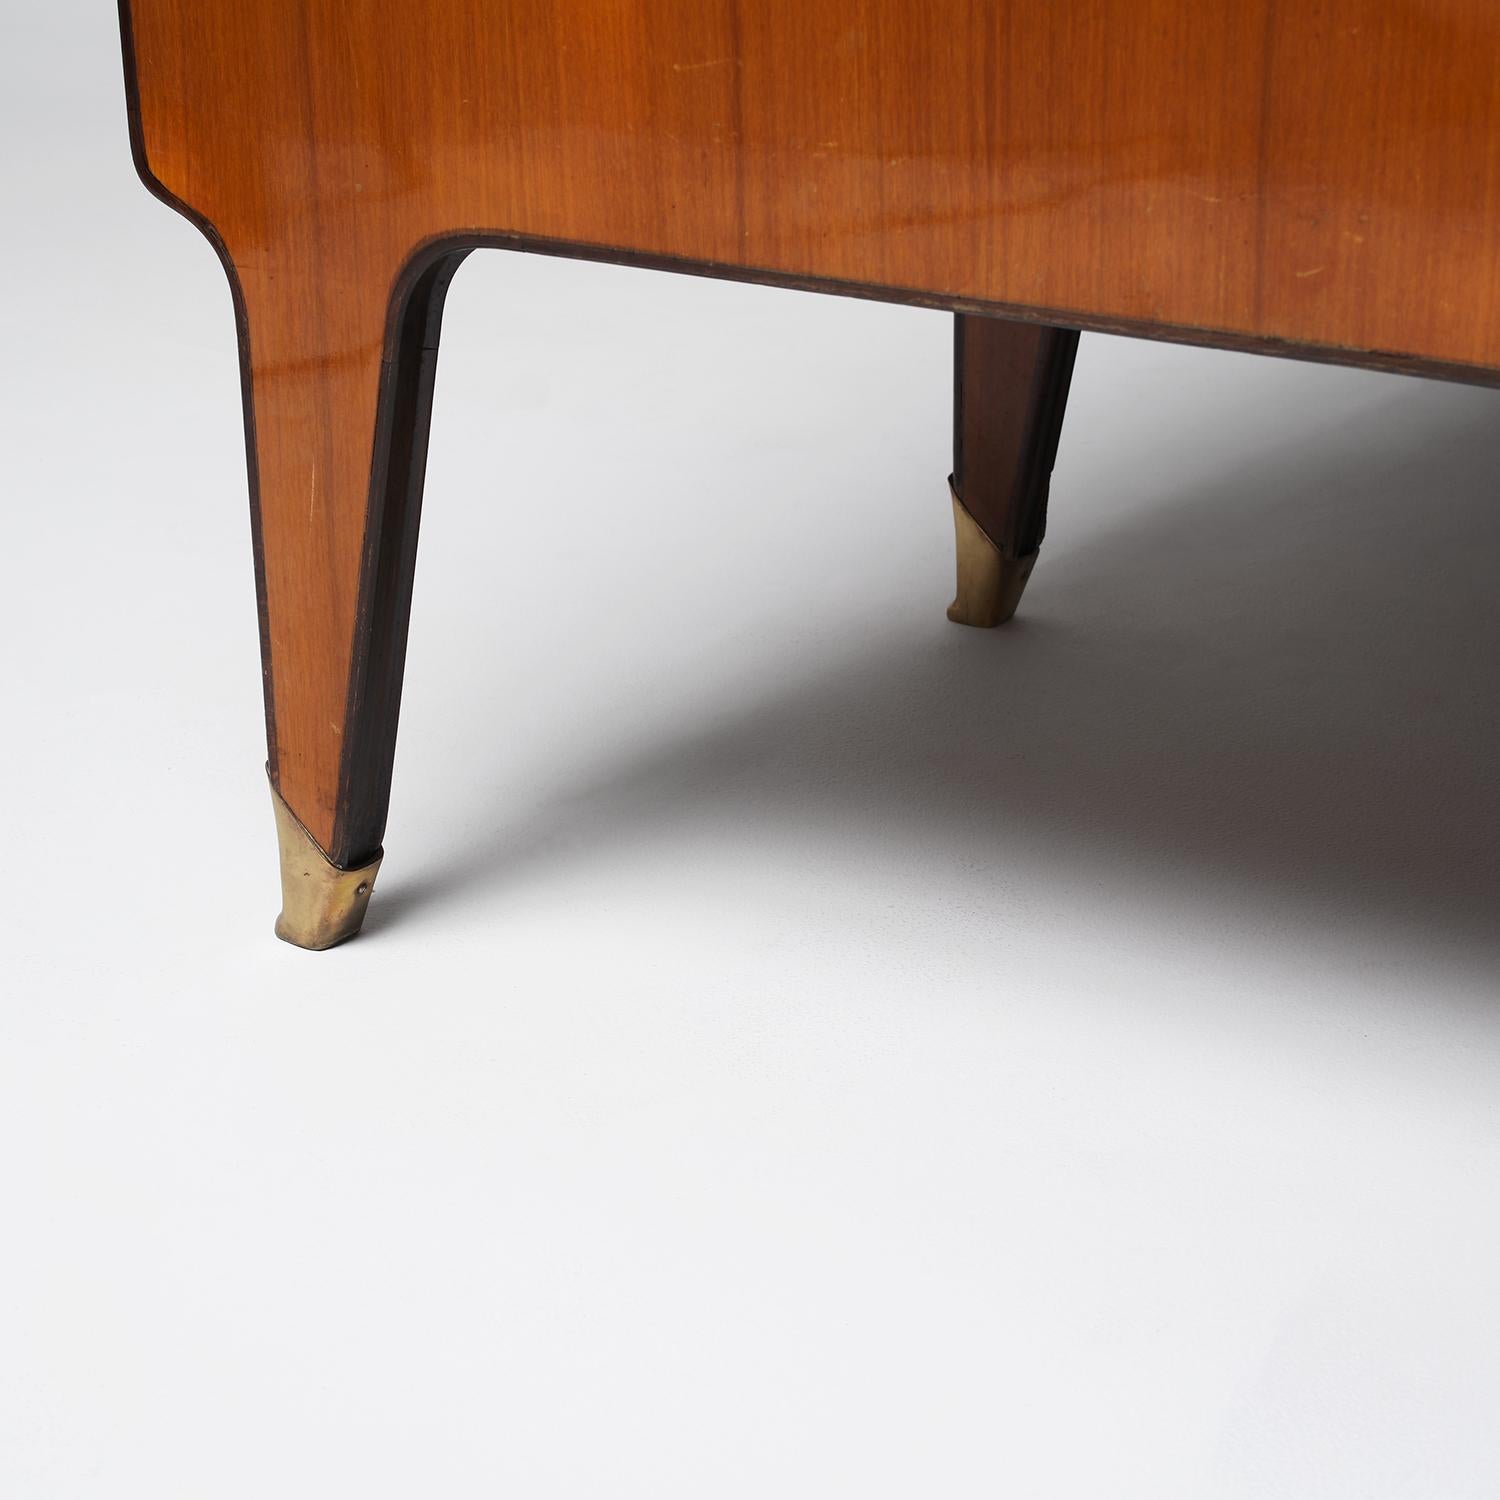 20th Century Italian Mahogany Writing Table - Vintage Desk by Vittorio Dassi For Sale 13